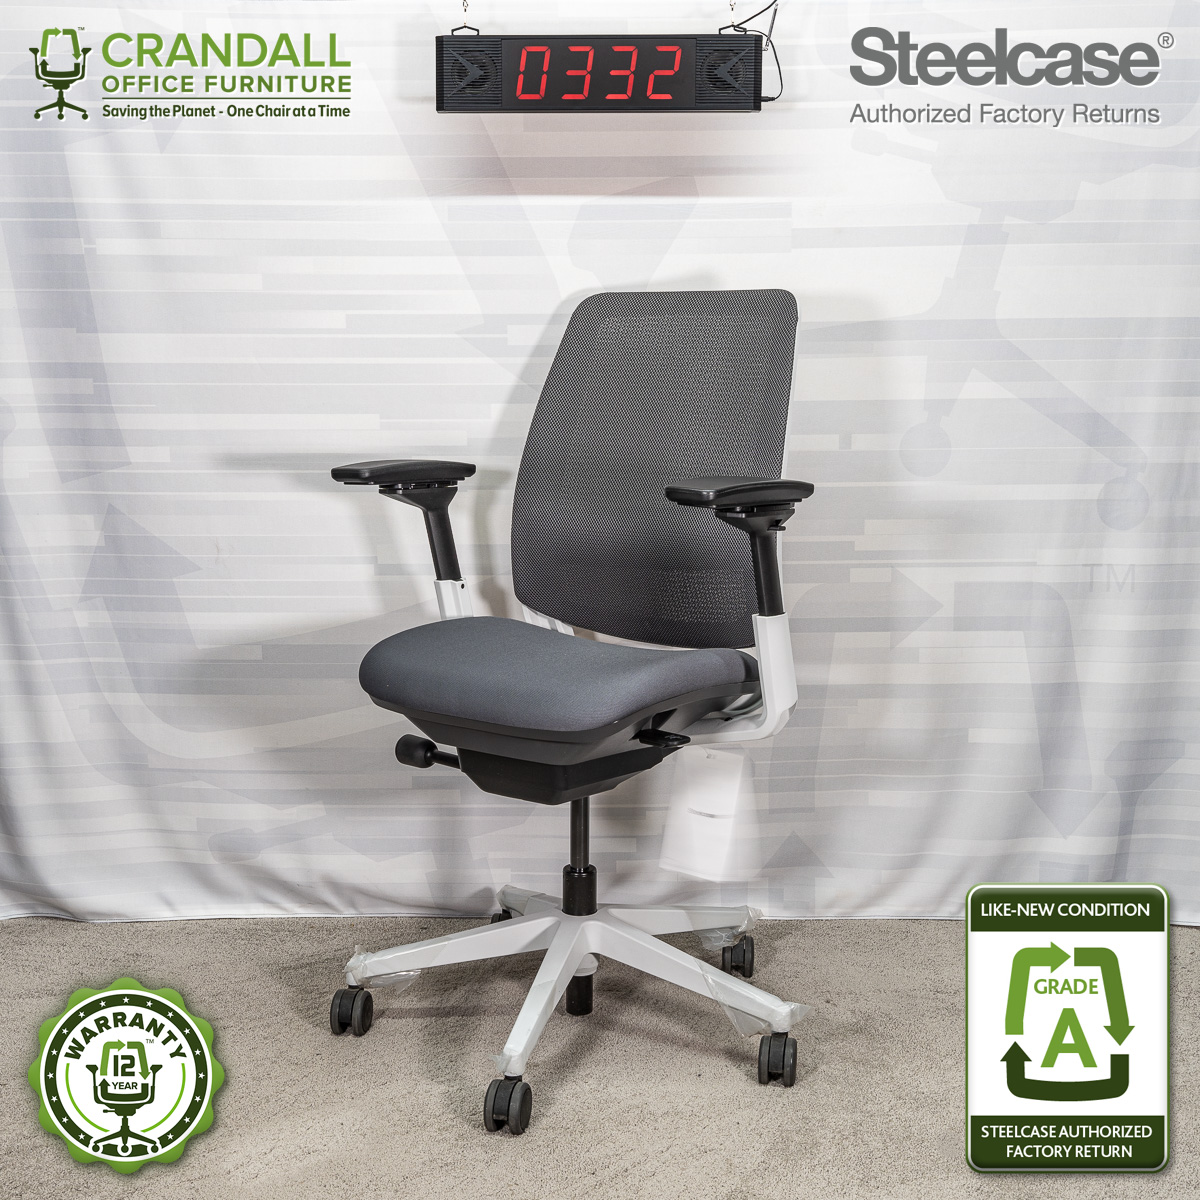 0332 - Steelcase Amia Air - Grade A - Crandall Office Furniture